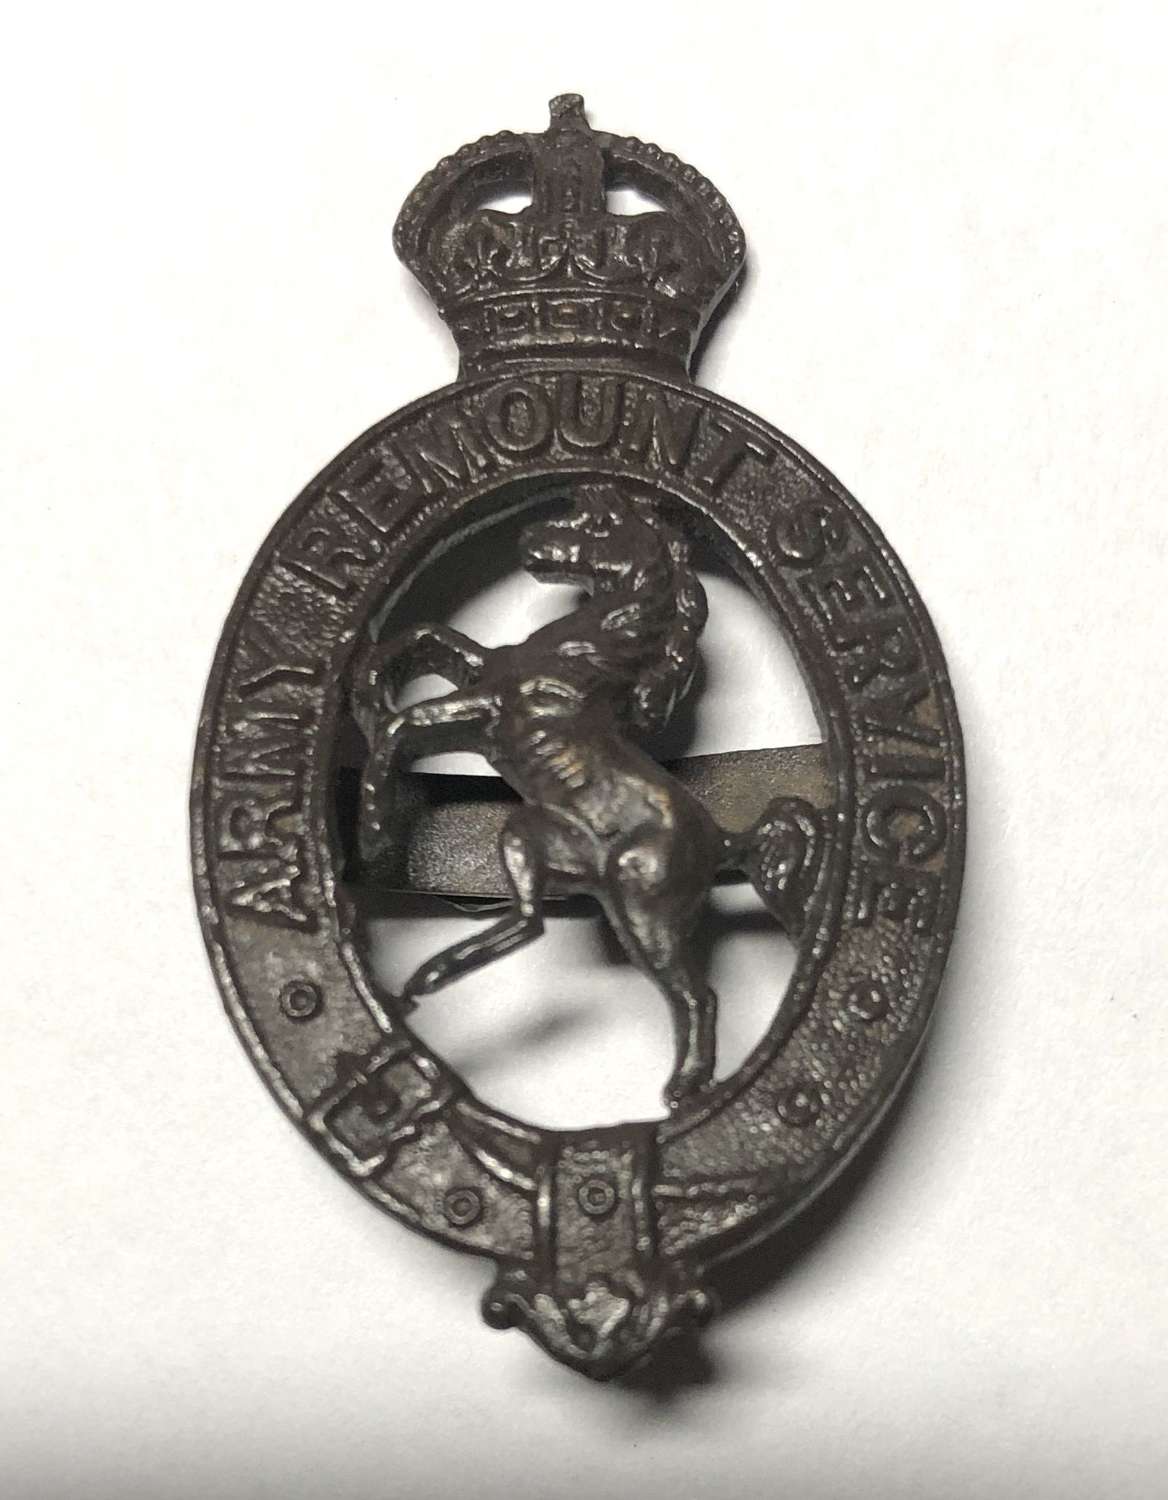 Army Remount Service rare WW1 OSD bronze cap badge by Gaunt, London